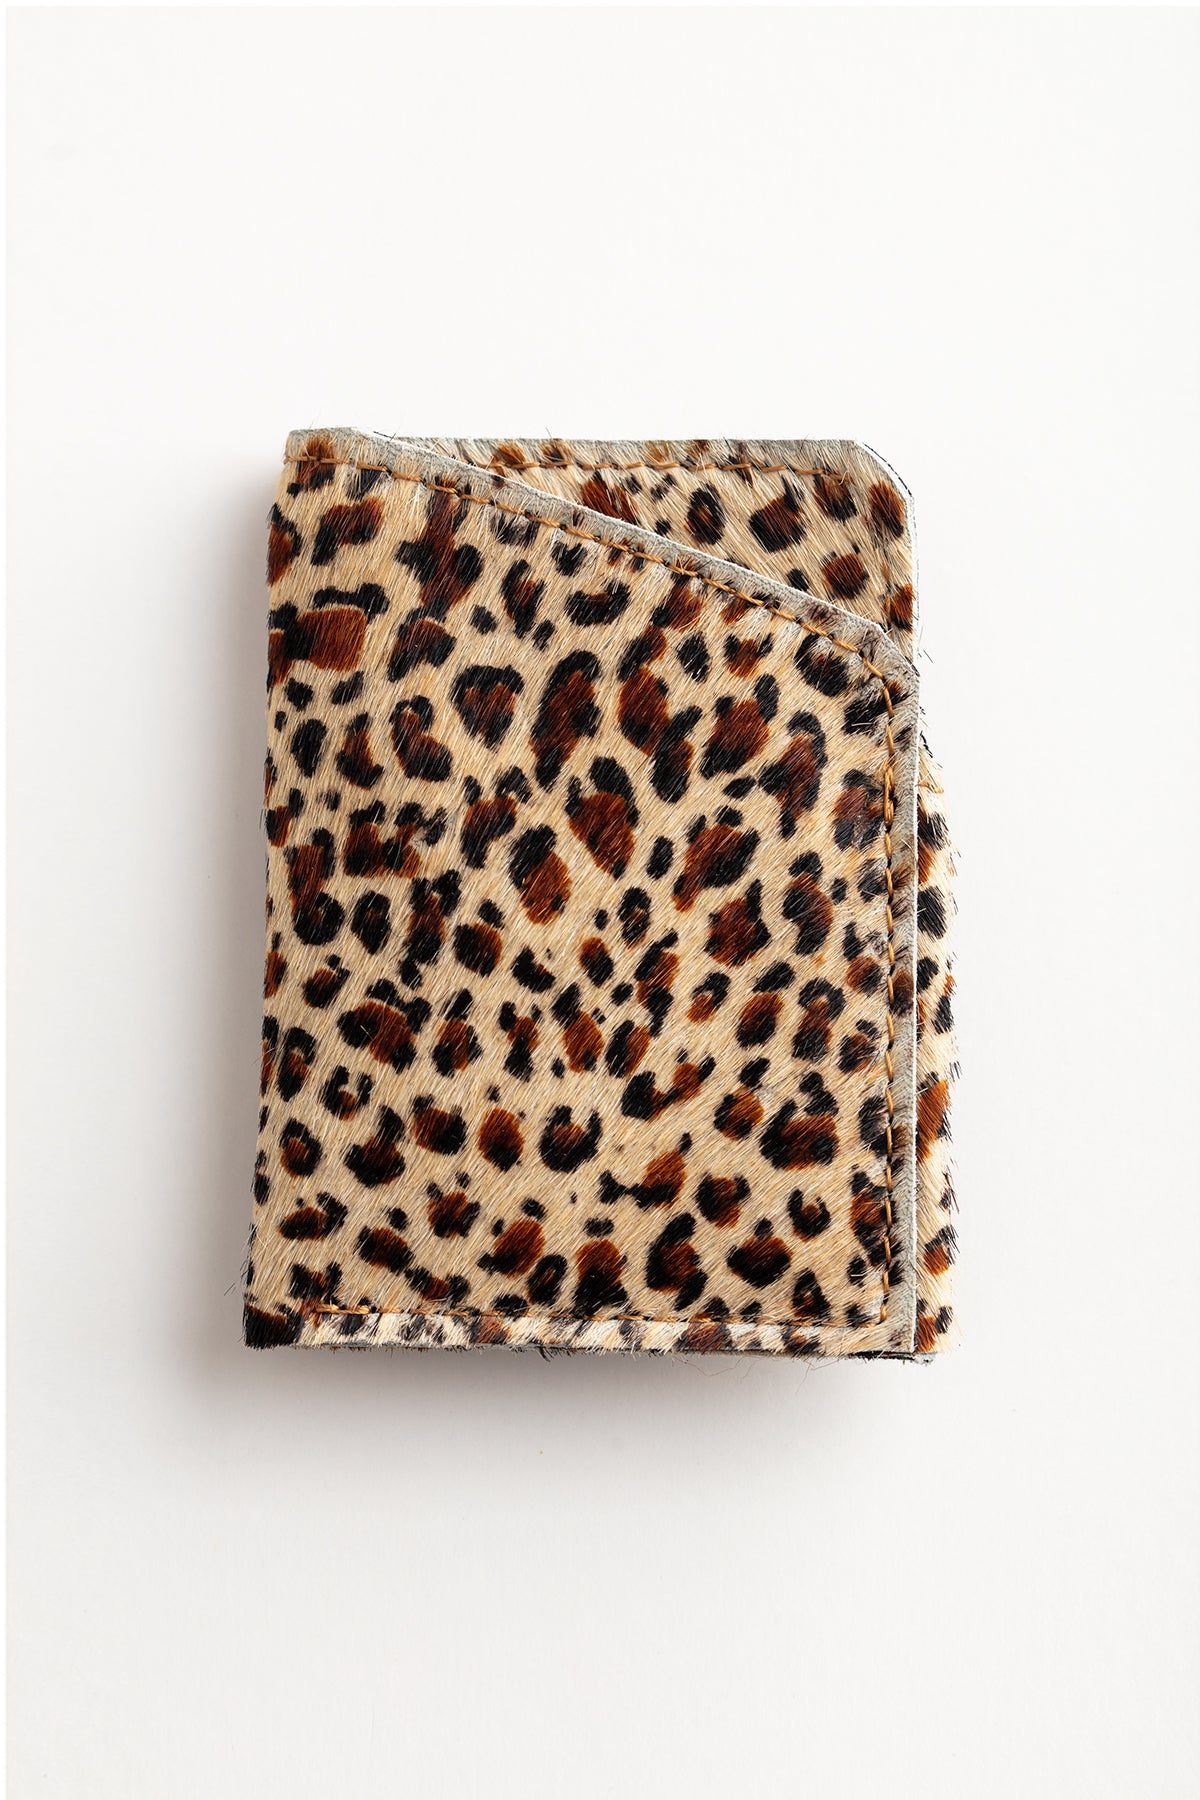 A minimalist leopard print SOFT LEATHER CARD HOLDER created by local artisans, Lima Sagrada.-600110268497